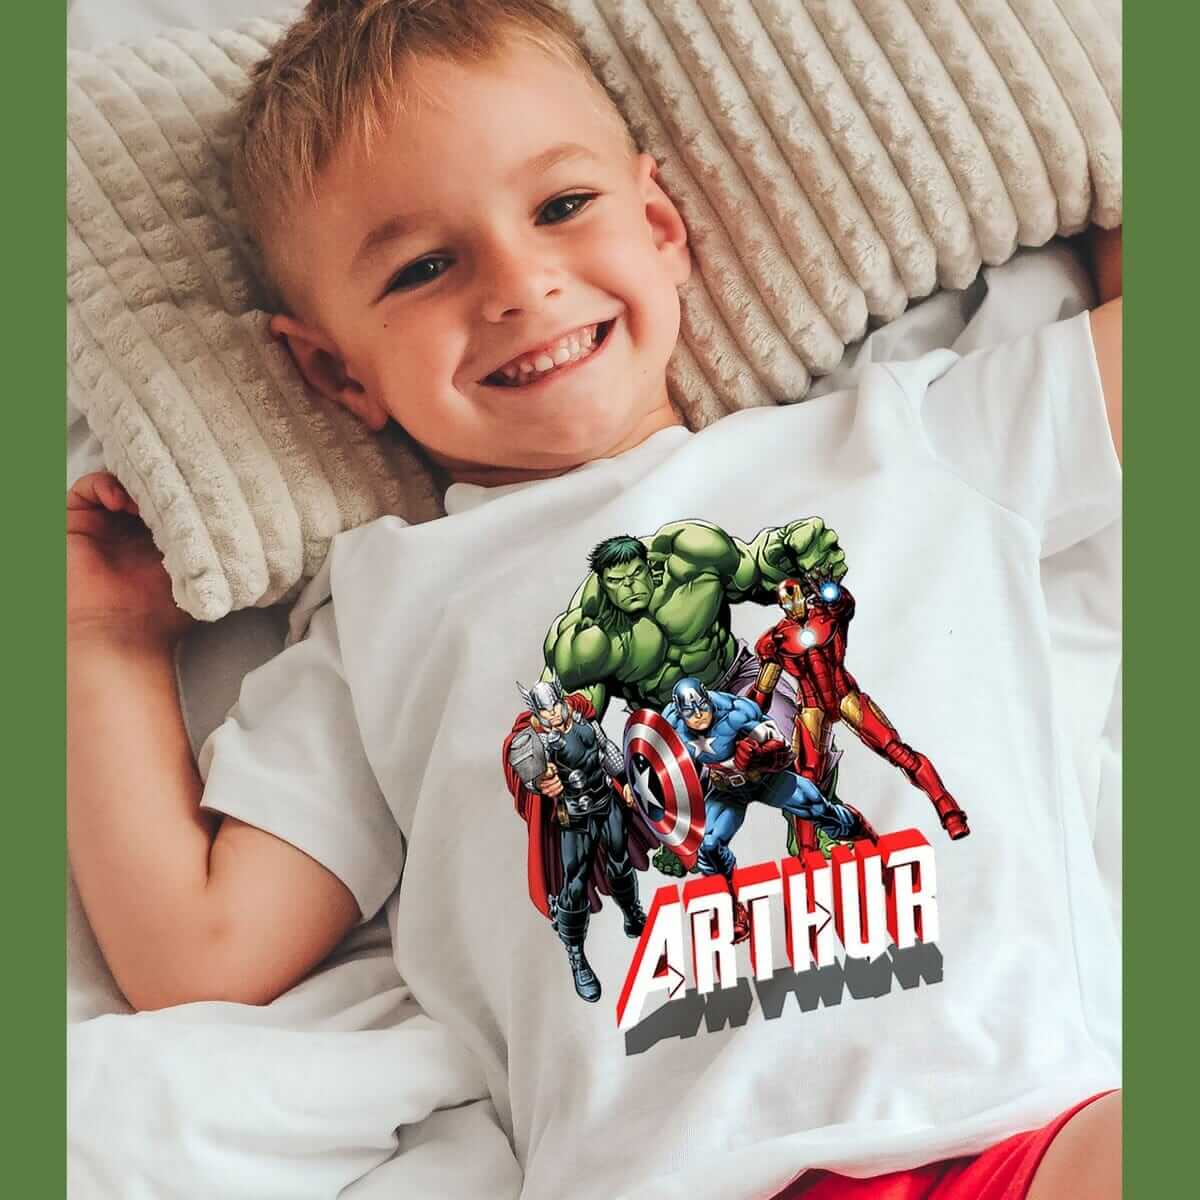 T-shirt Avengers